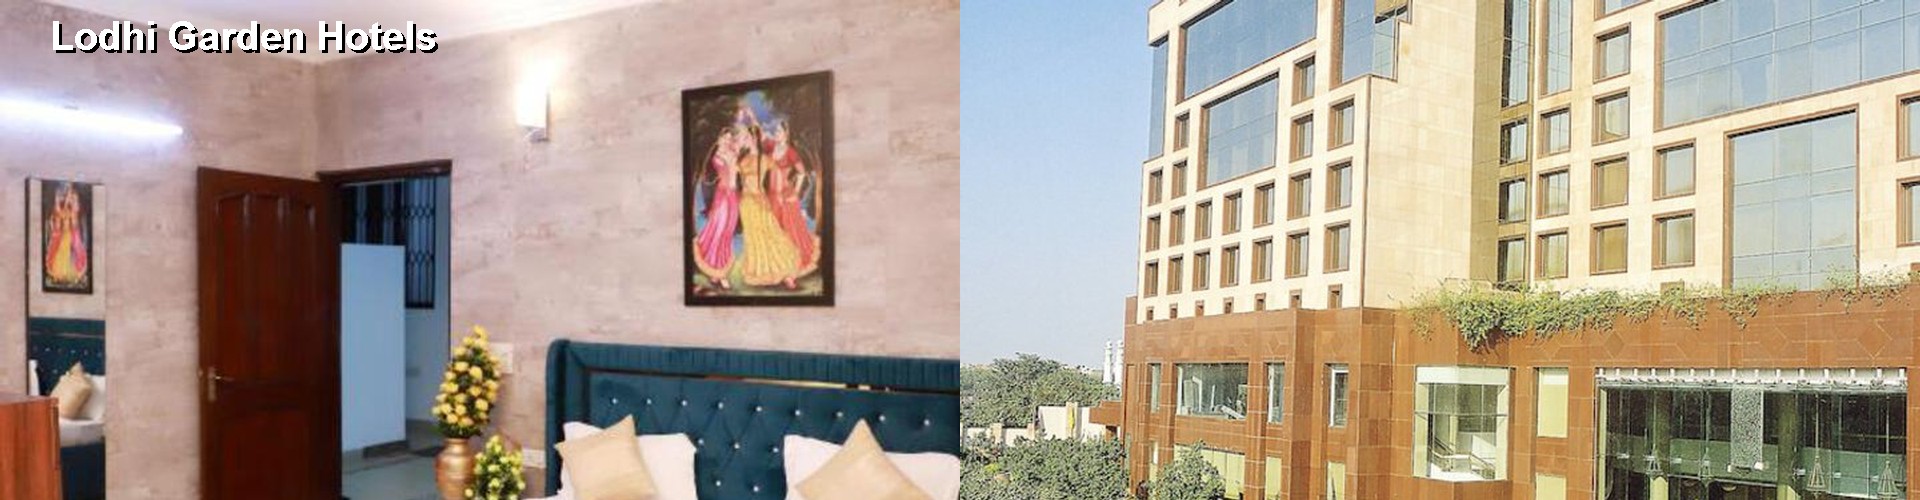 5 Best Hotels near Lodhi Garden